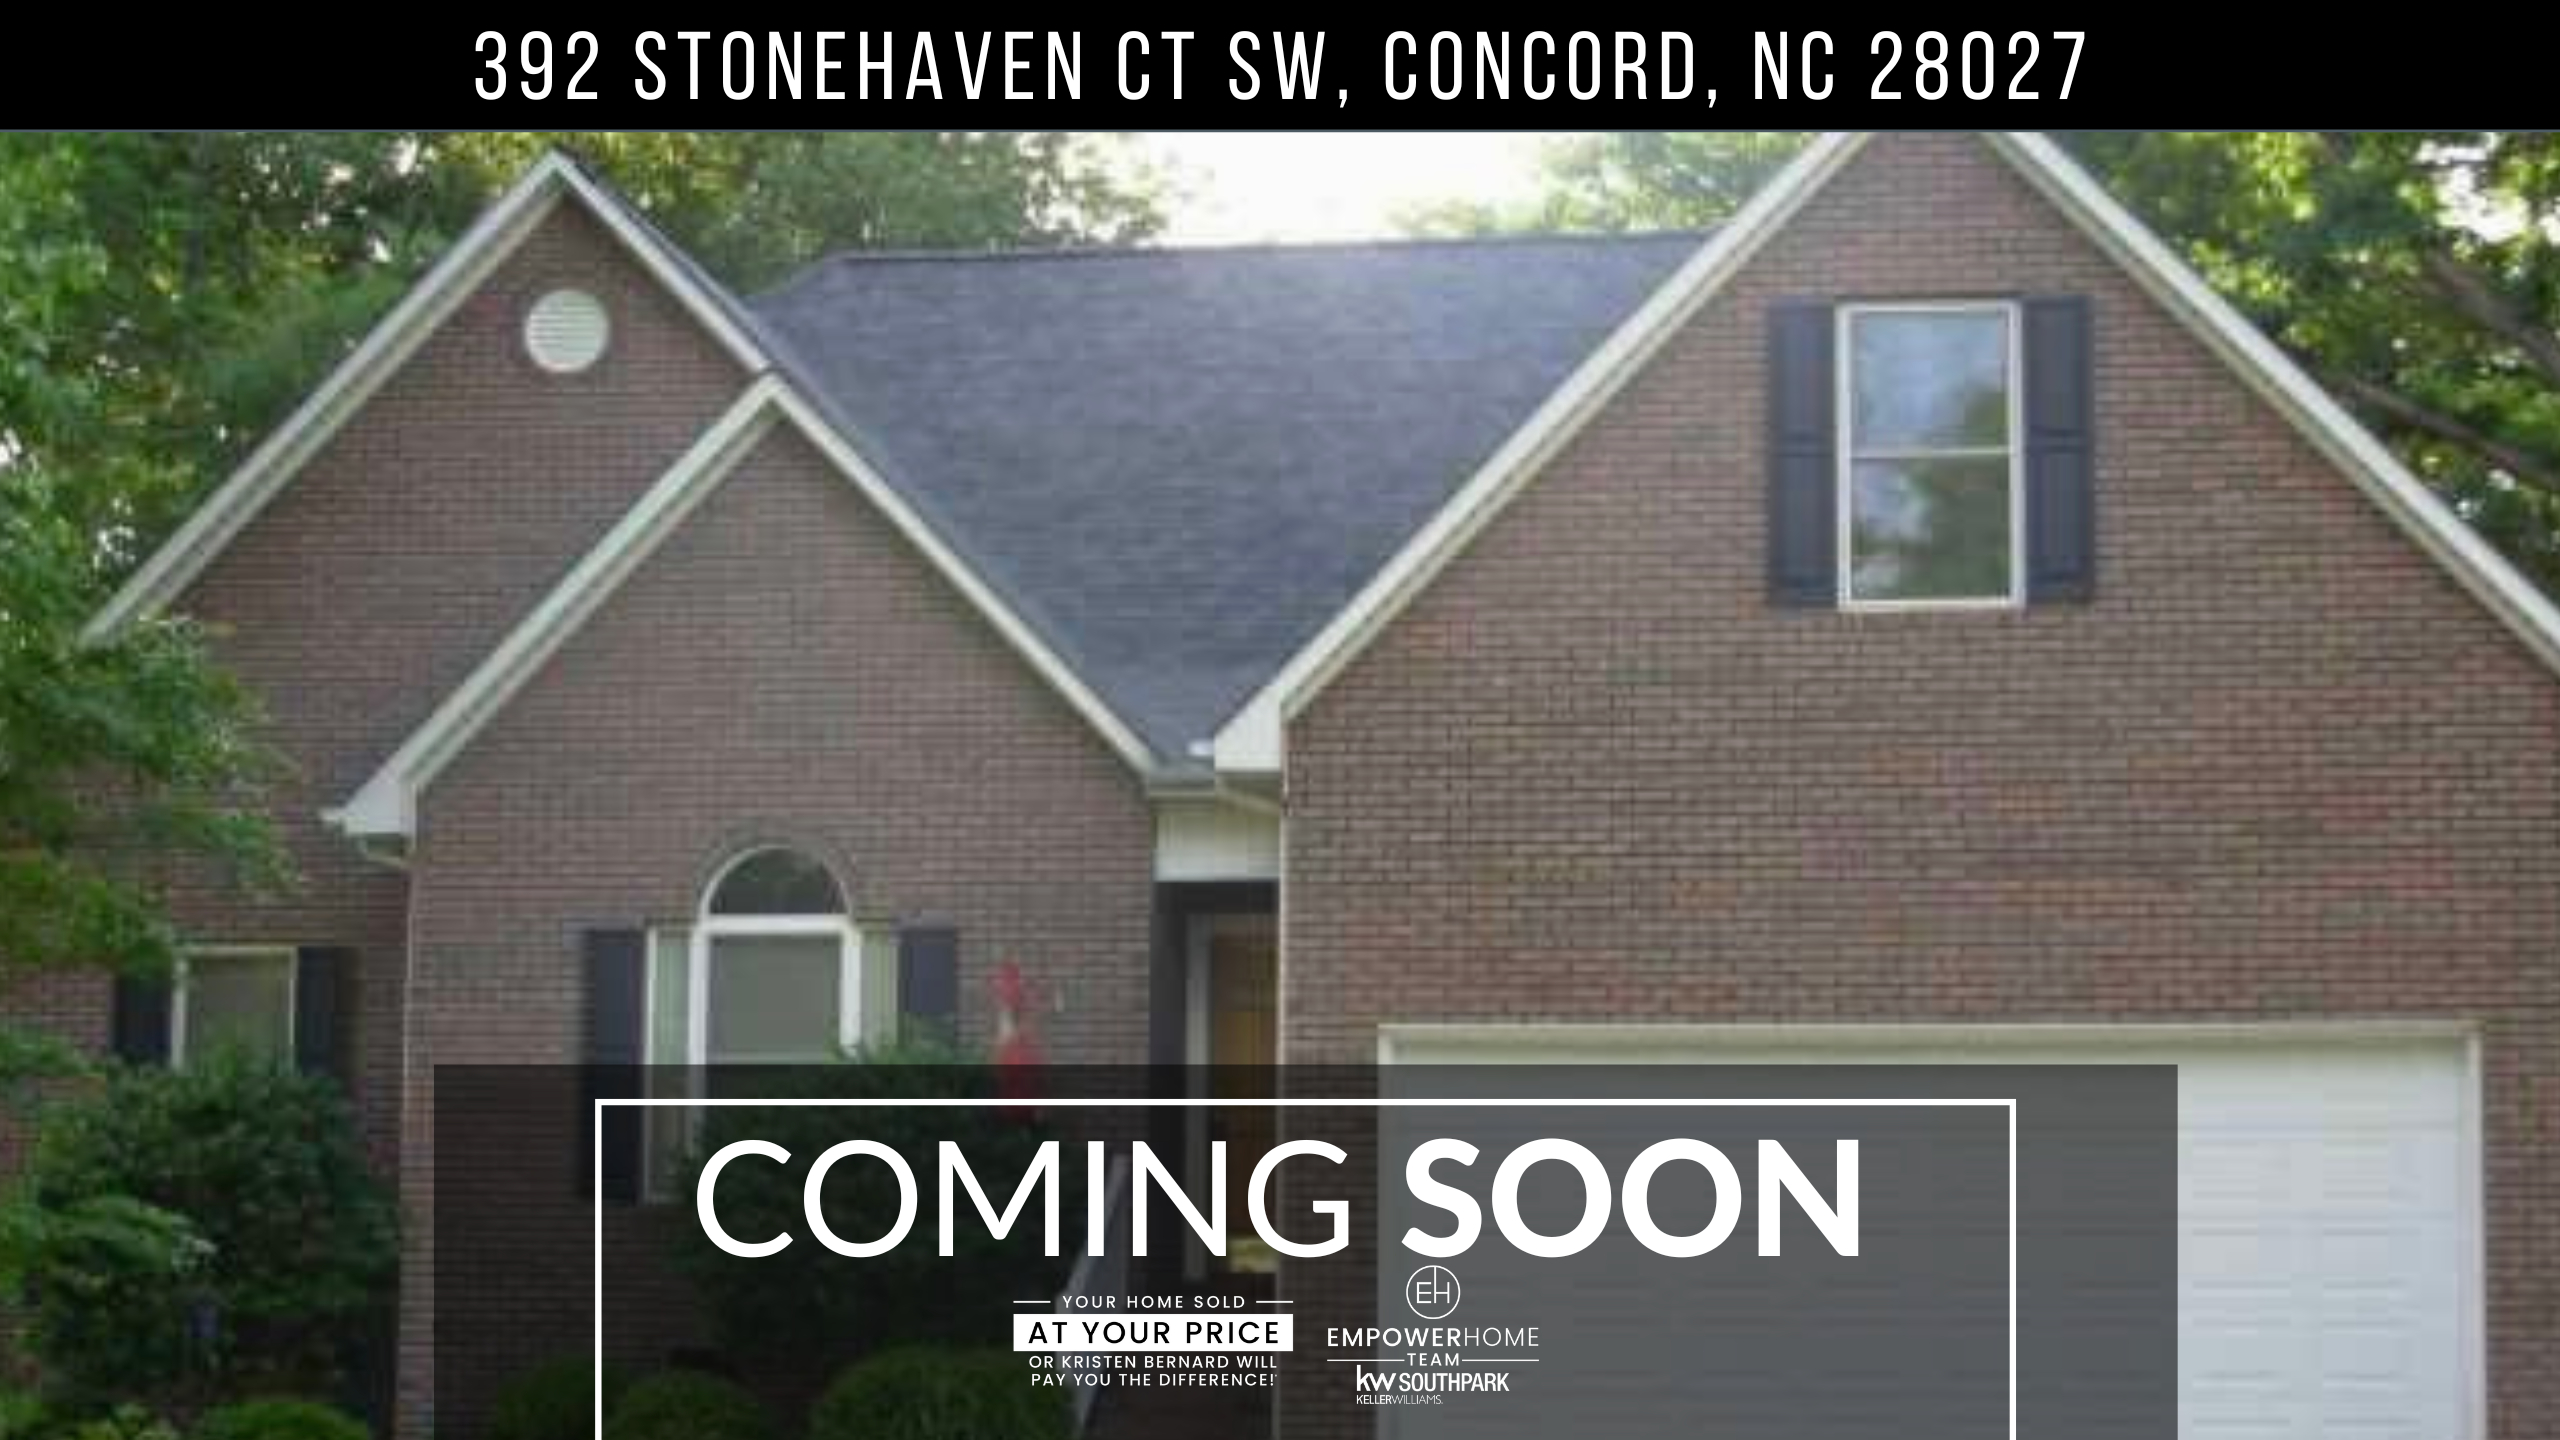 392 Stonehaven Ct SW, Concord, NC 28027